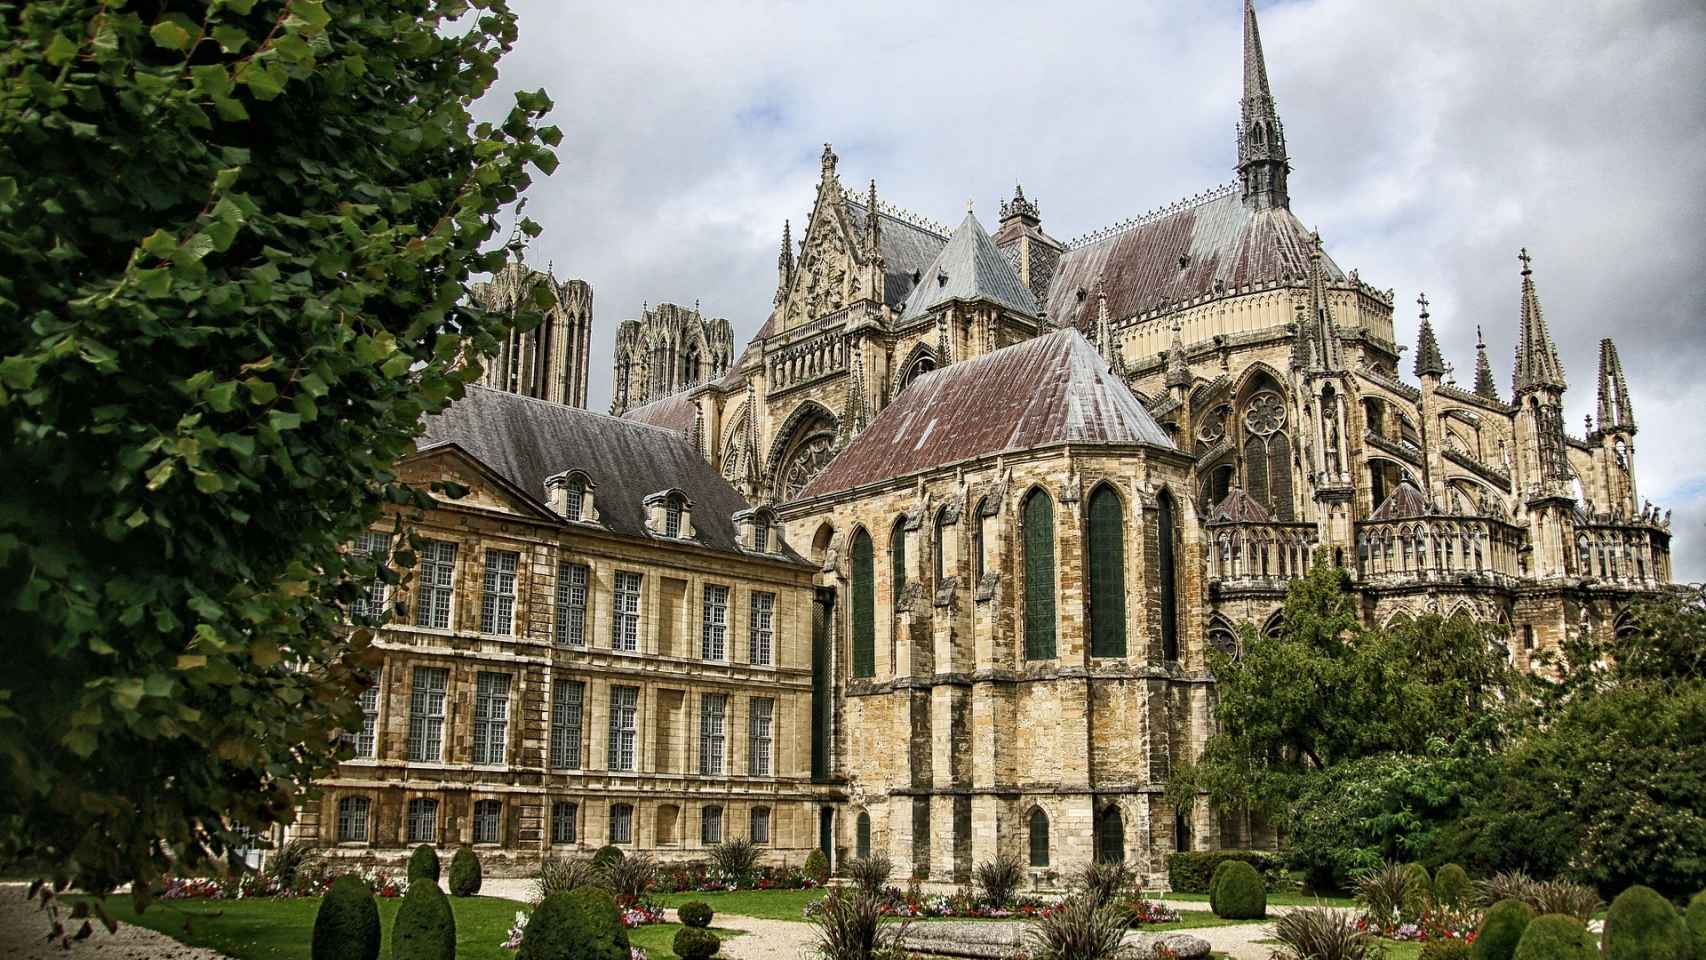 Catedral de Reims.